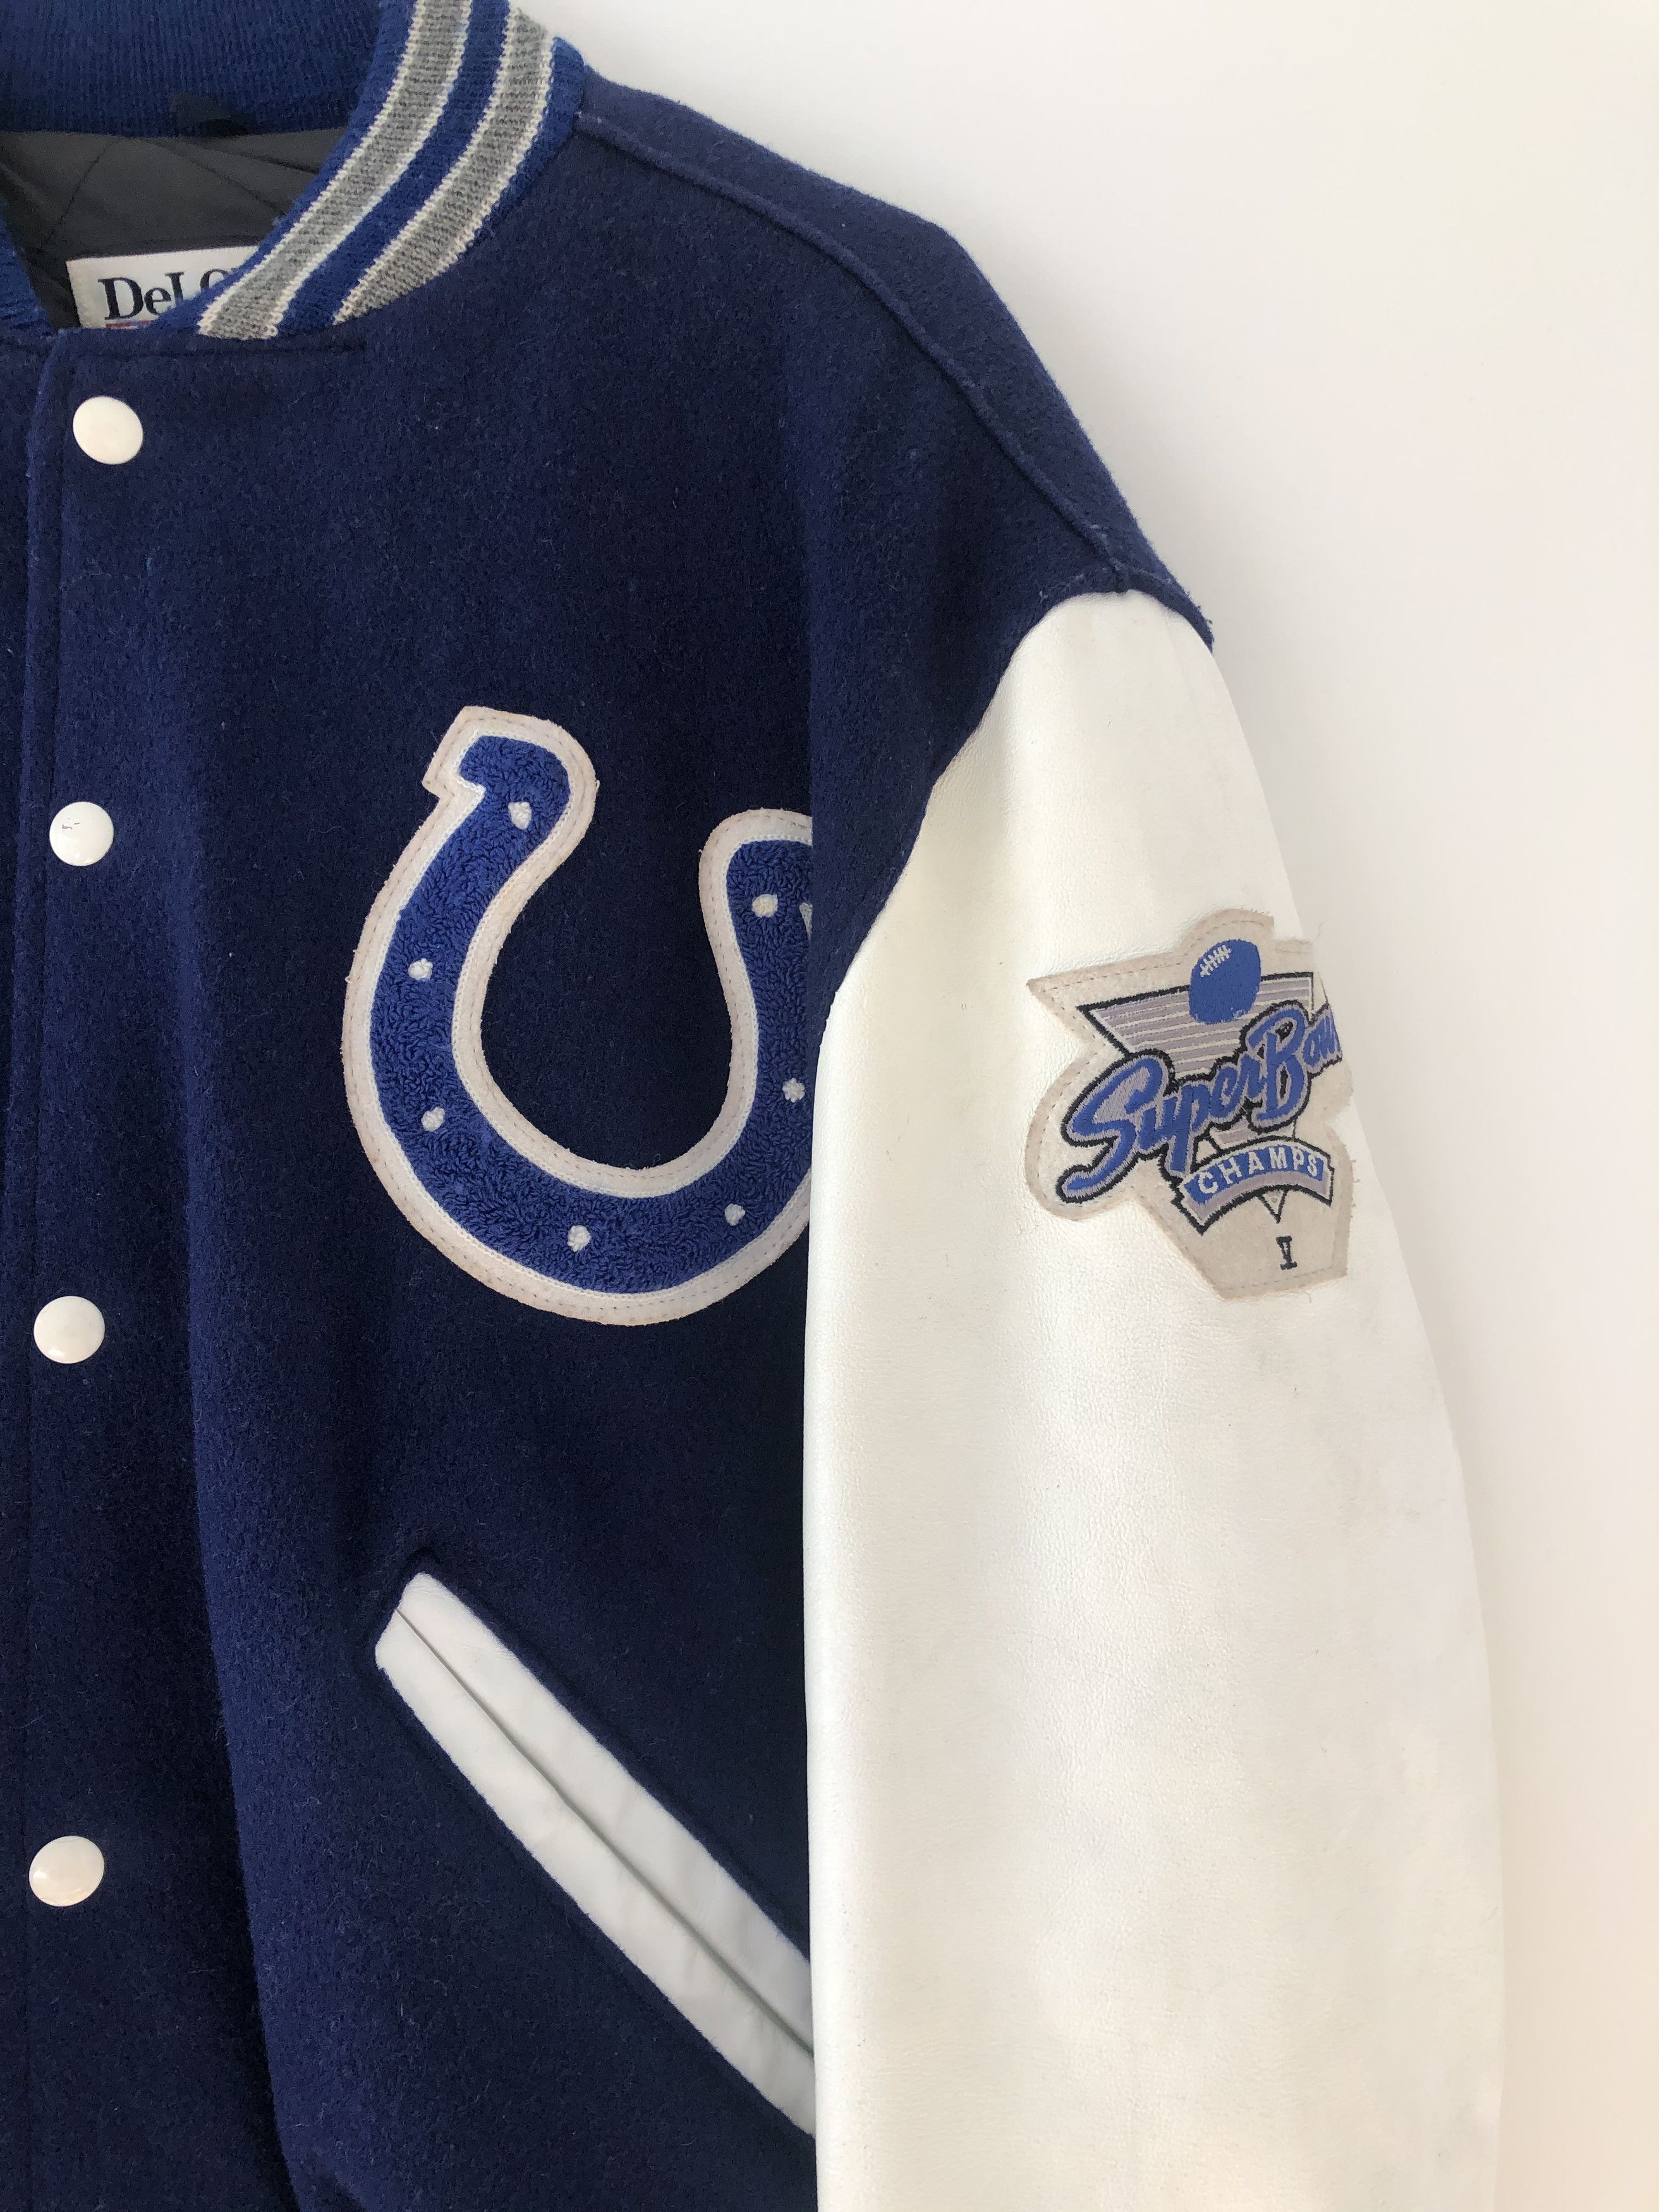 Vintage Indianapolis Colts Authentic 1971 Leather Jacket Size US S / EU 44-46 / 1 - 5 Preview